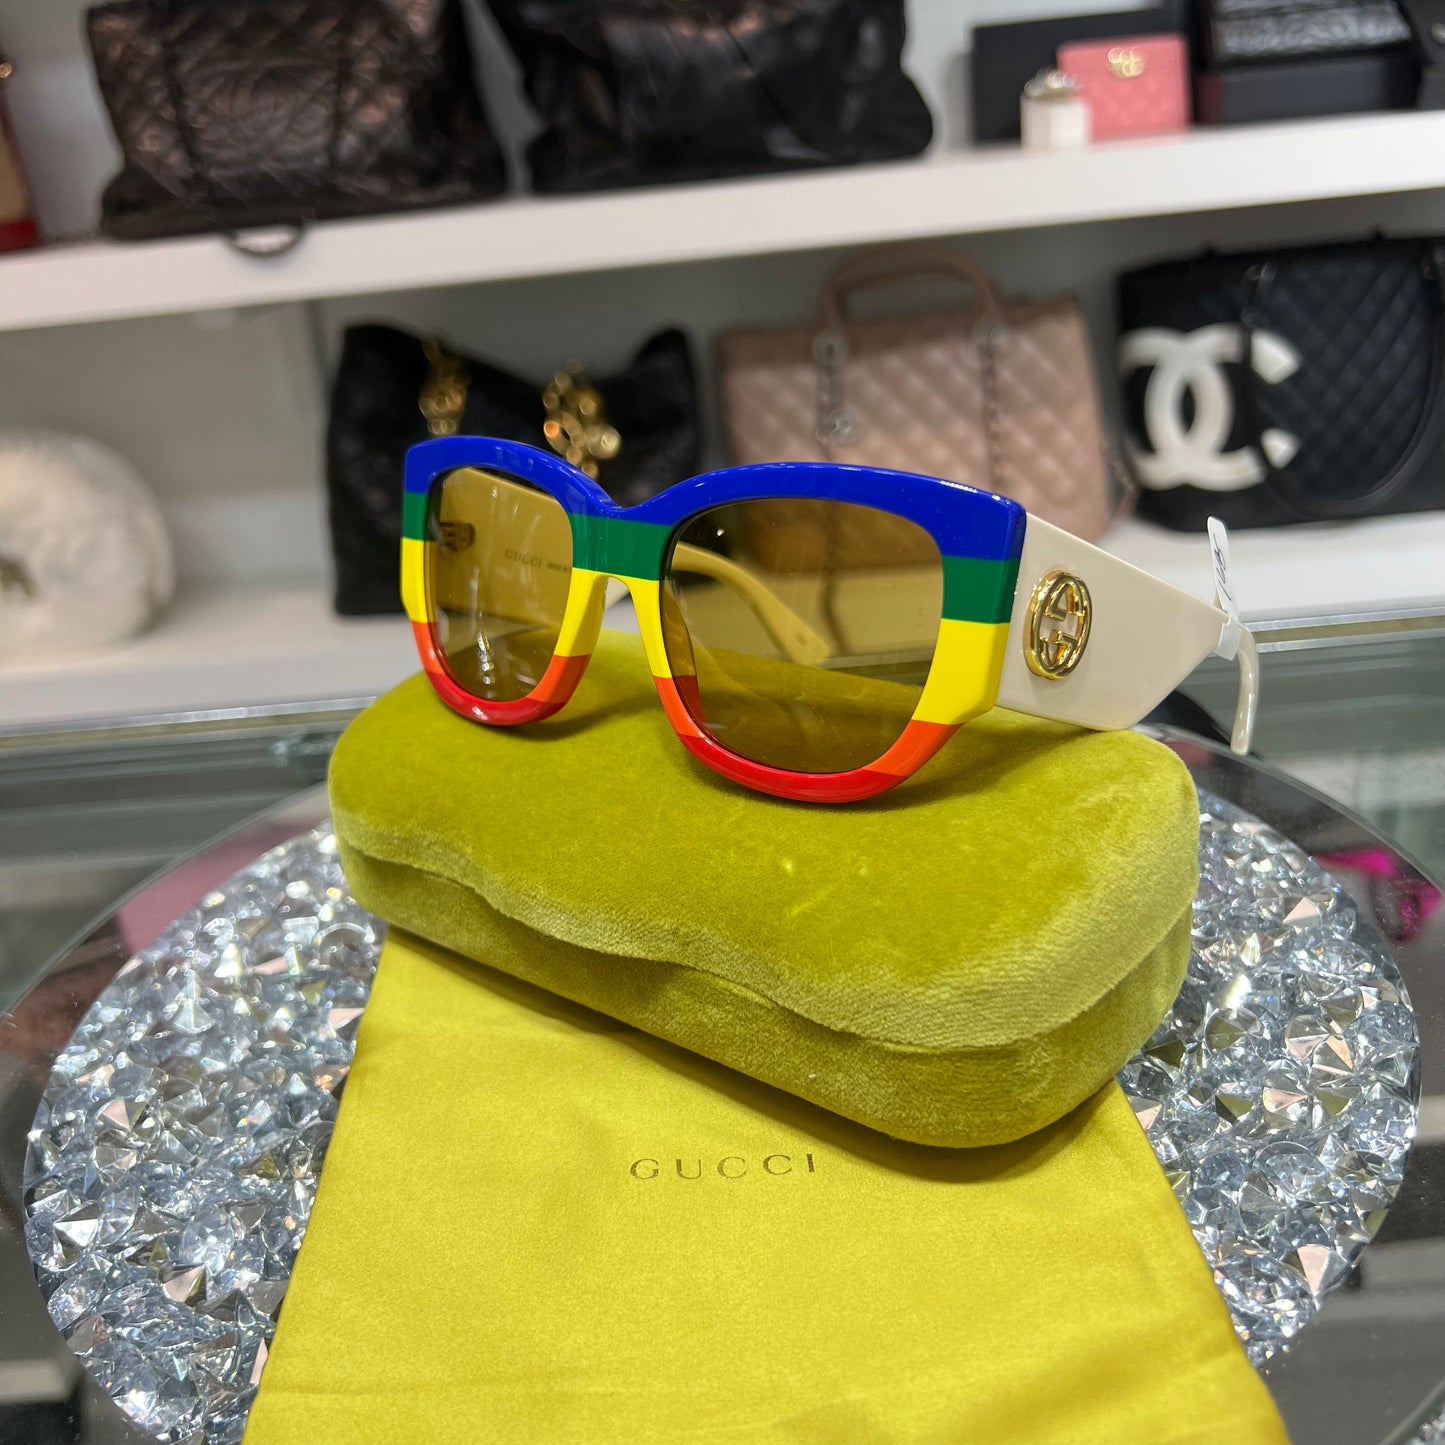 Gucci Multicolor Sunglasses with Case & Dust Bag